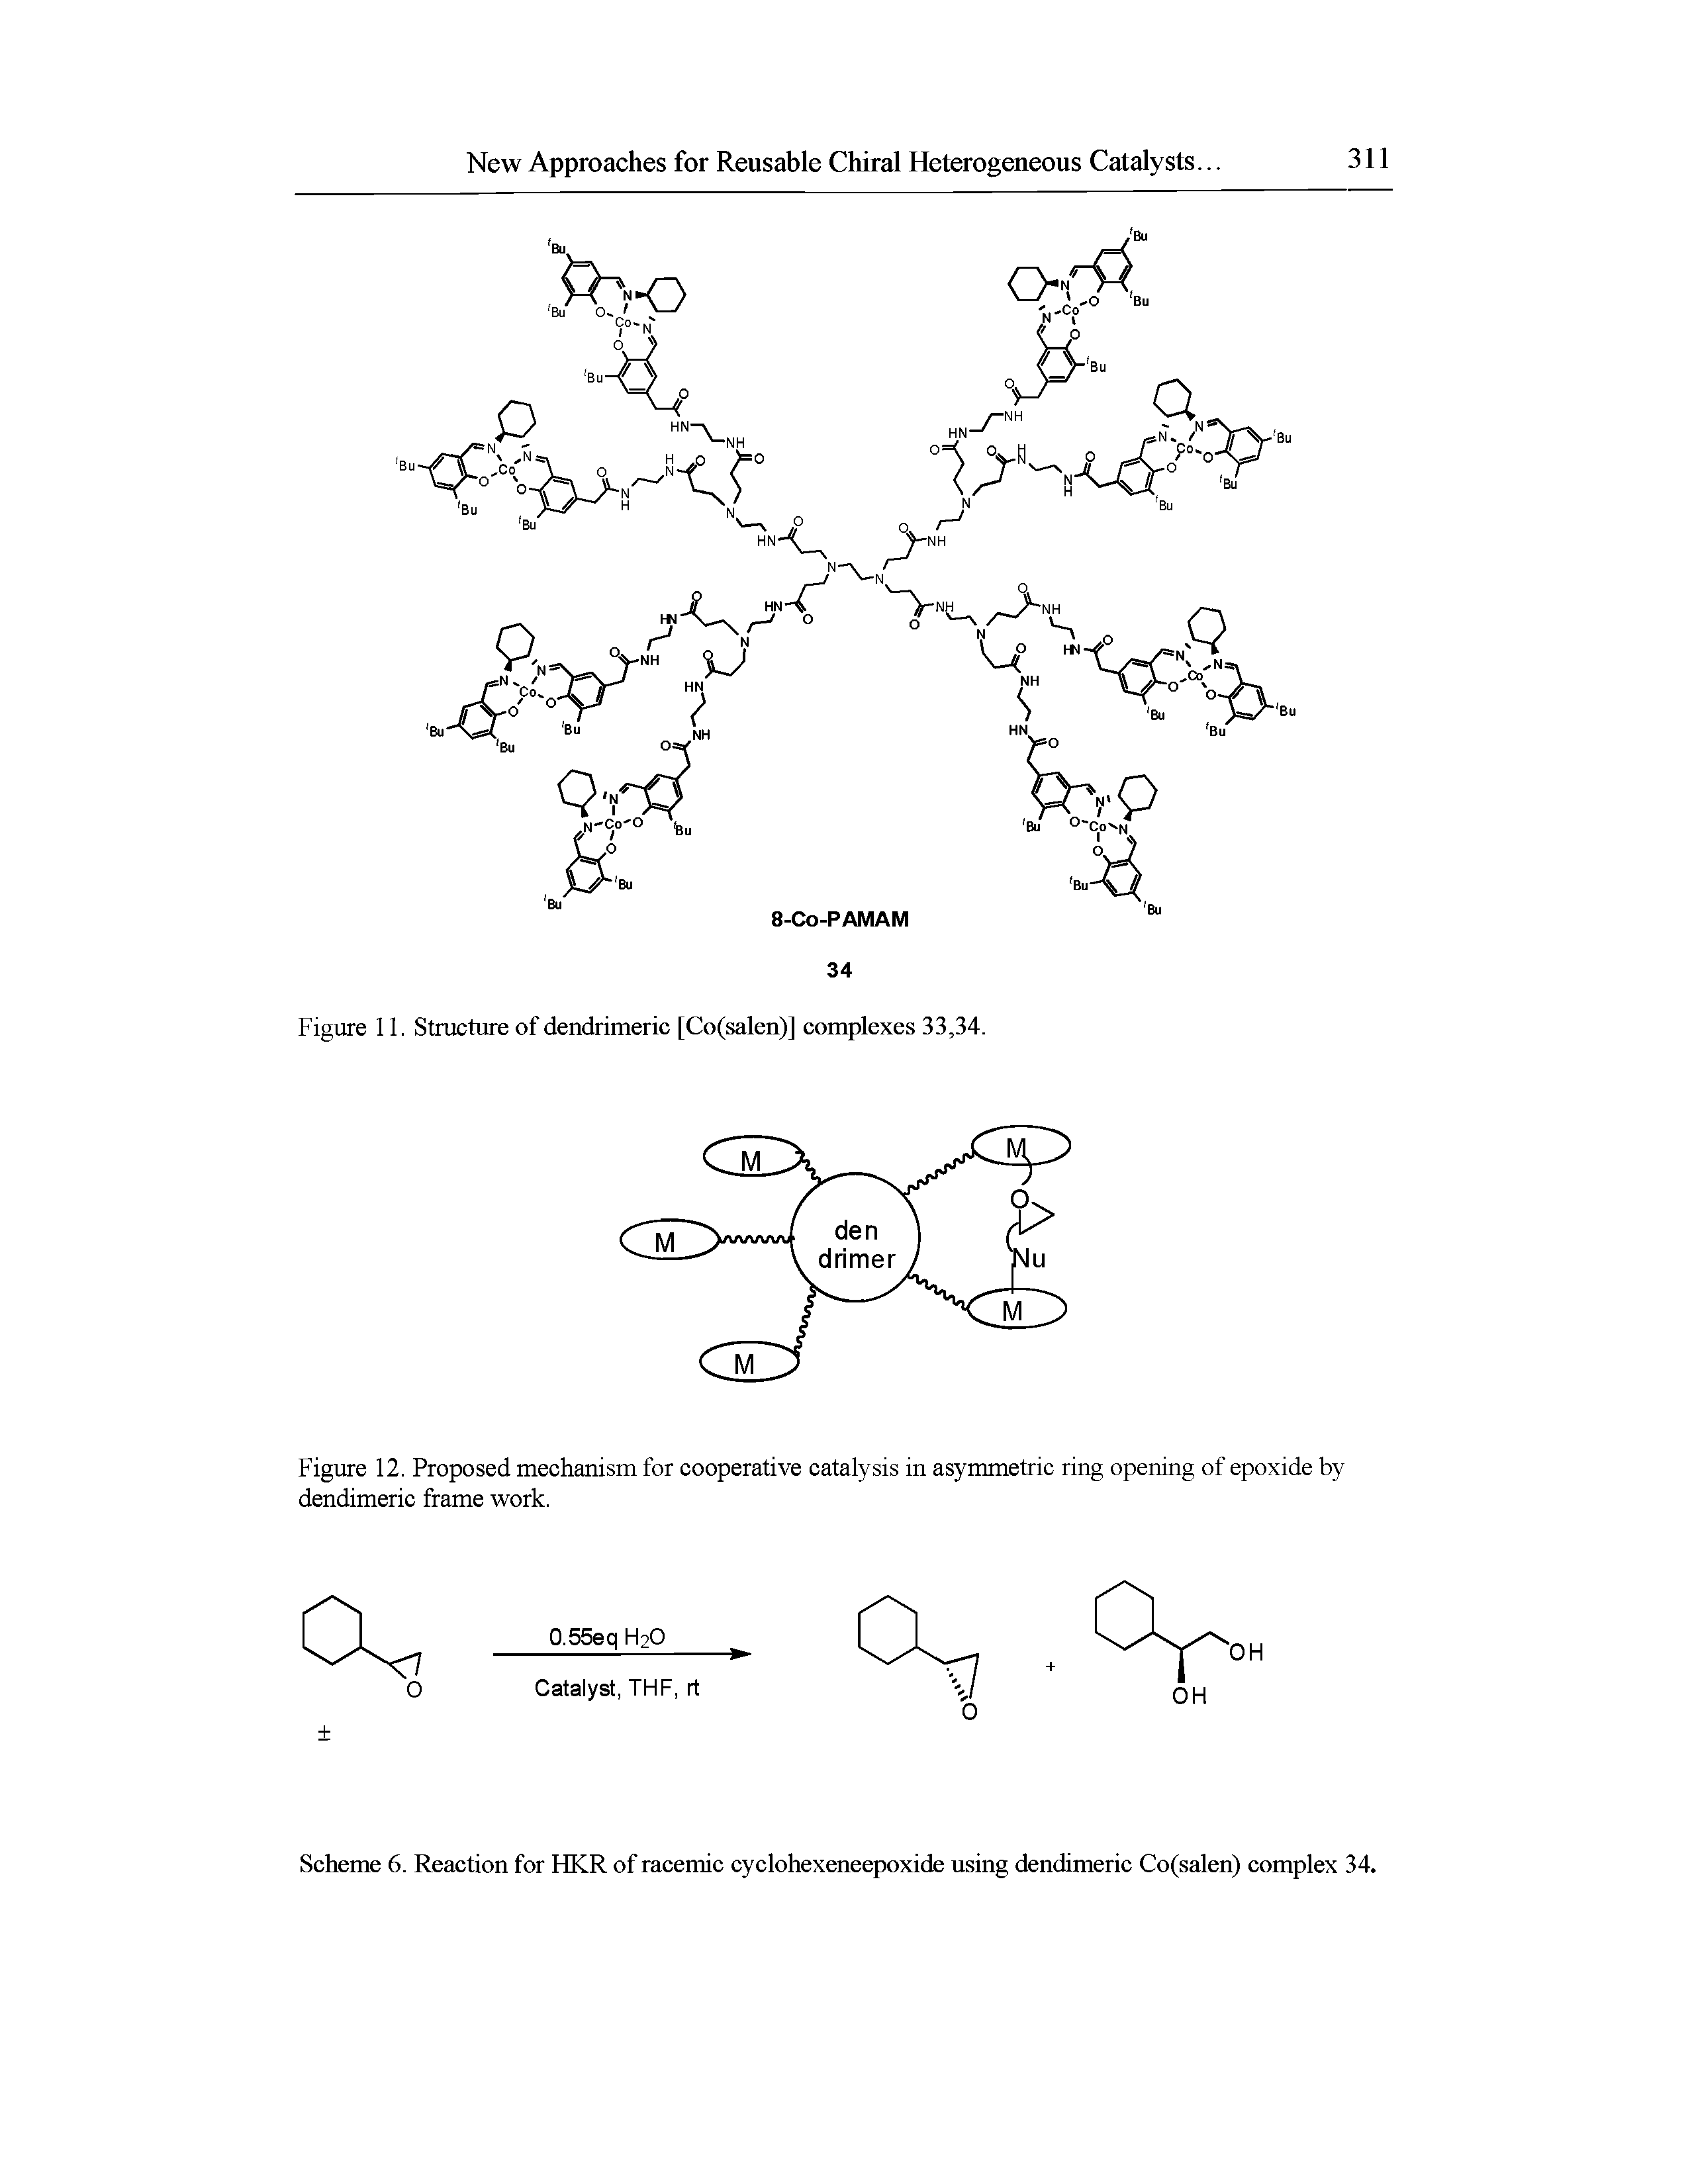 Scheme 6. Reaction for HKR of racemic cyclohexeneepoxide using dendimeric Co(salen) complex 34.